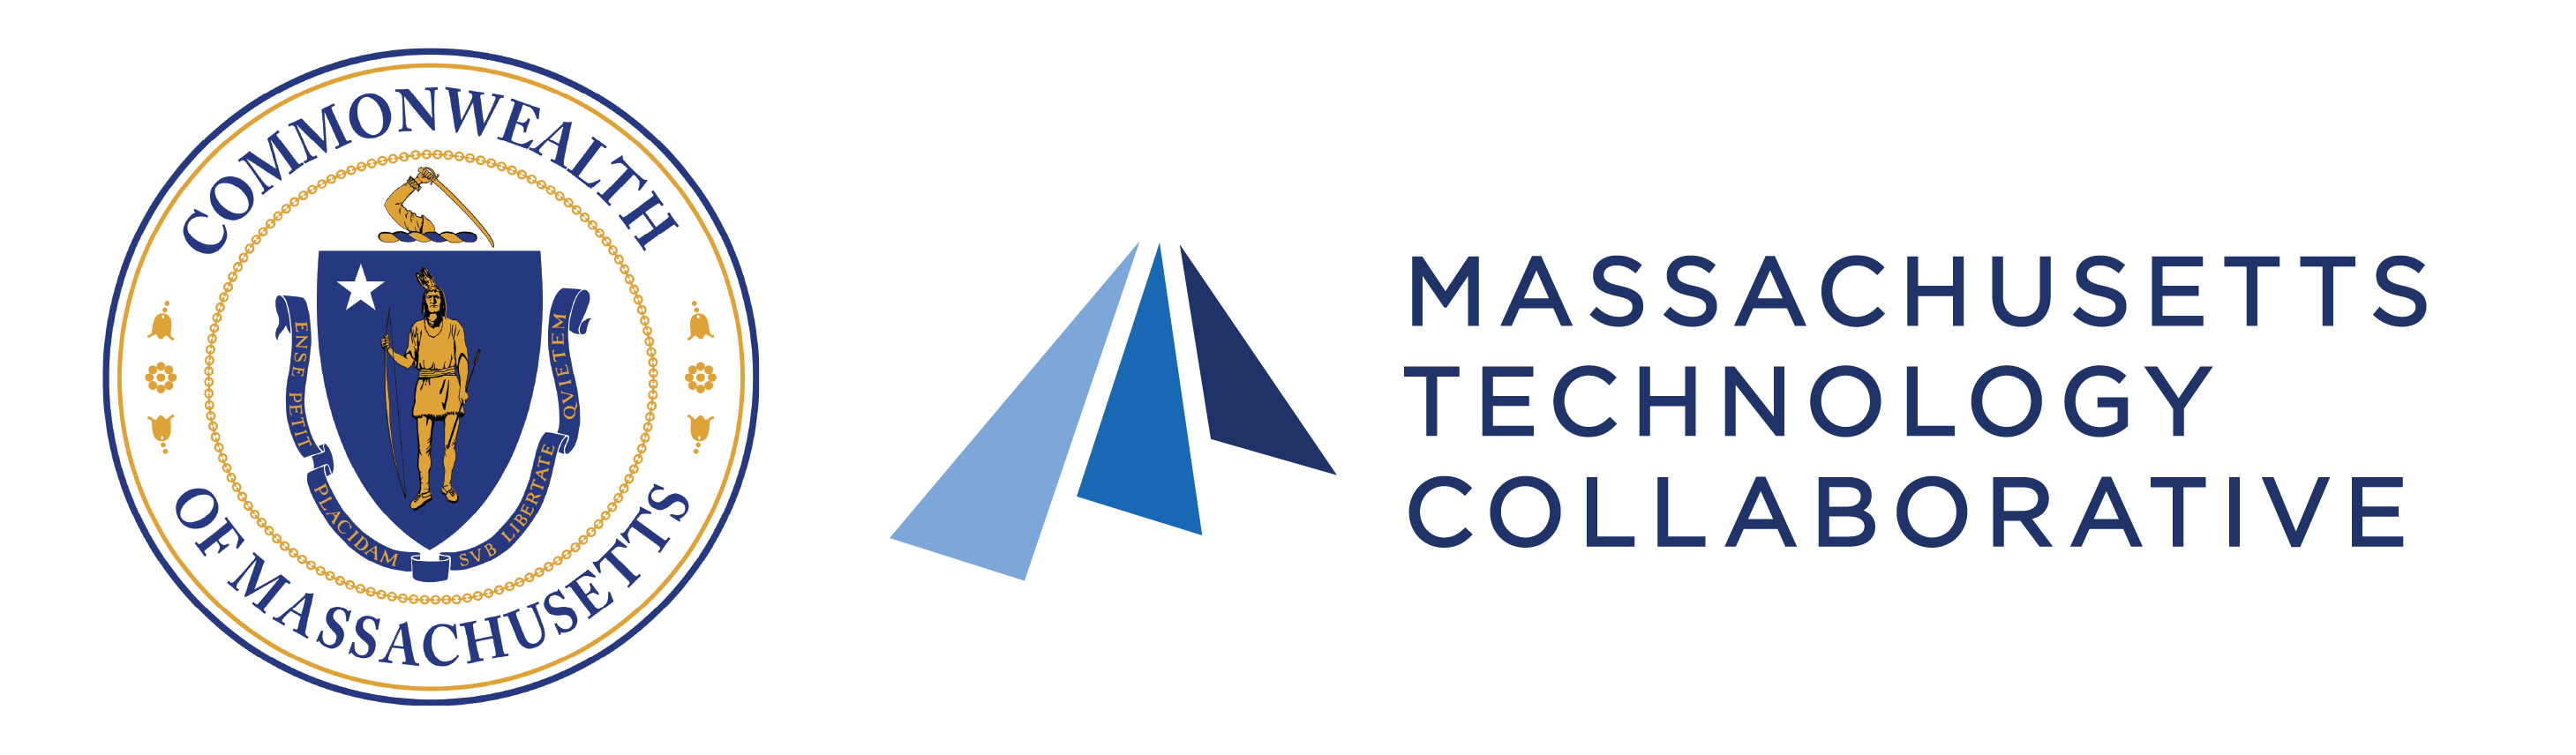 MA State Seal and MassTech logo